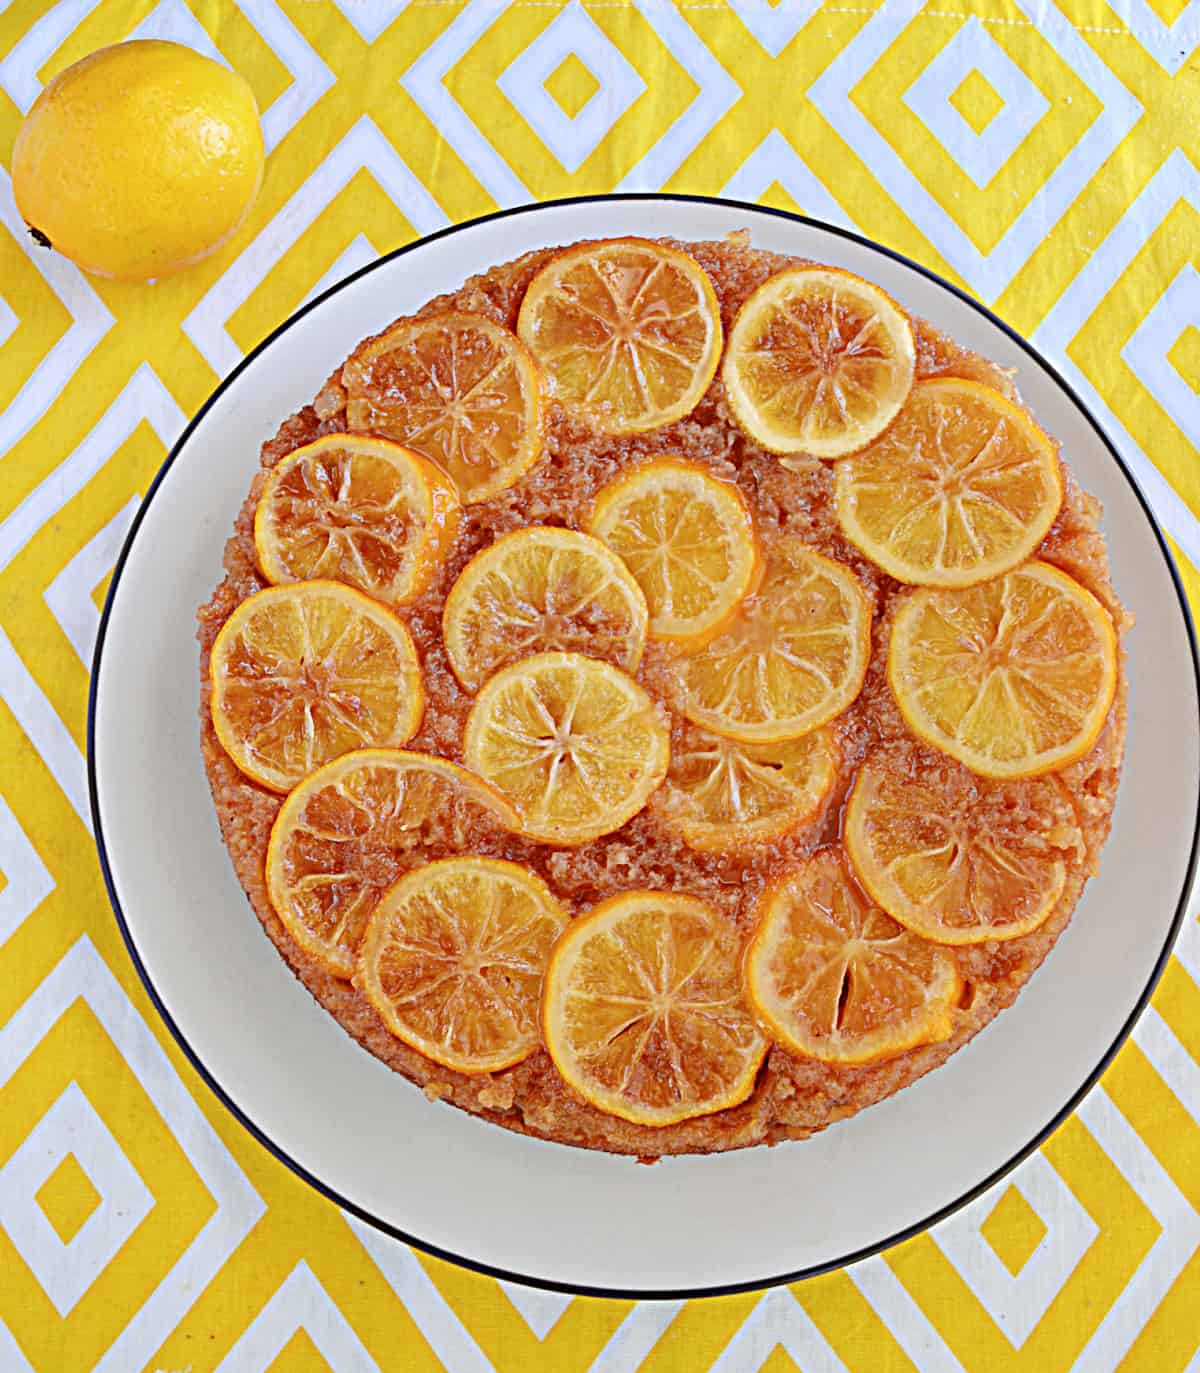 A lemon upside down cake with lemon slices on top and a lemon beside it.